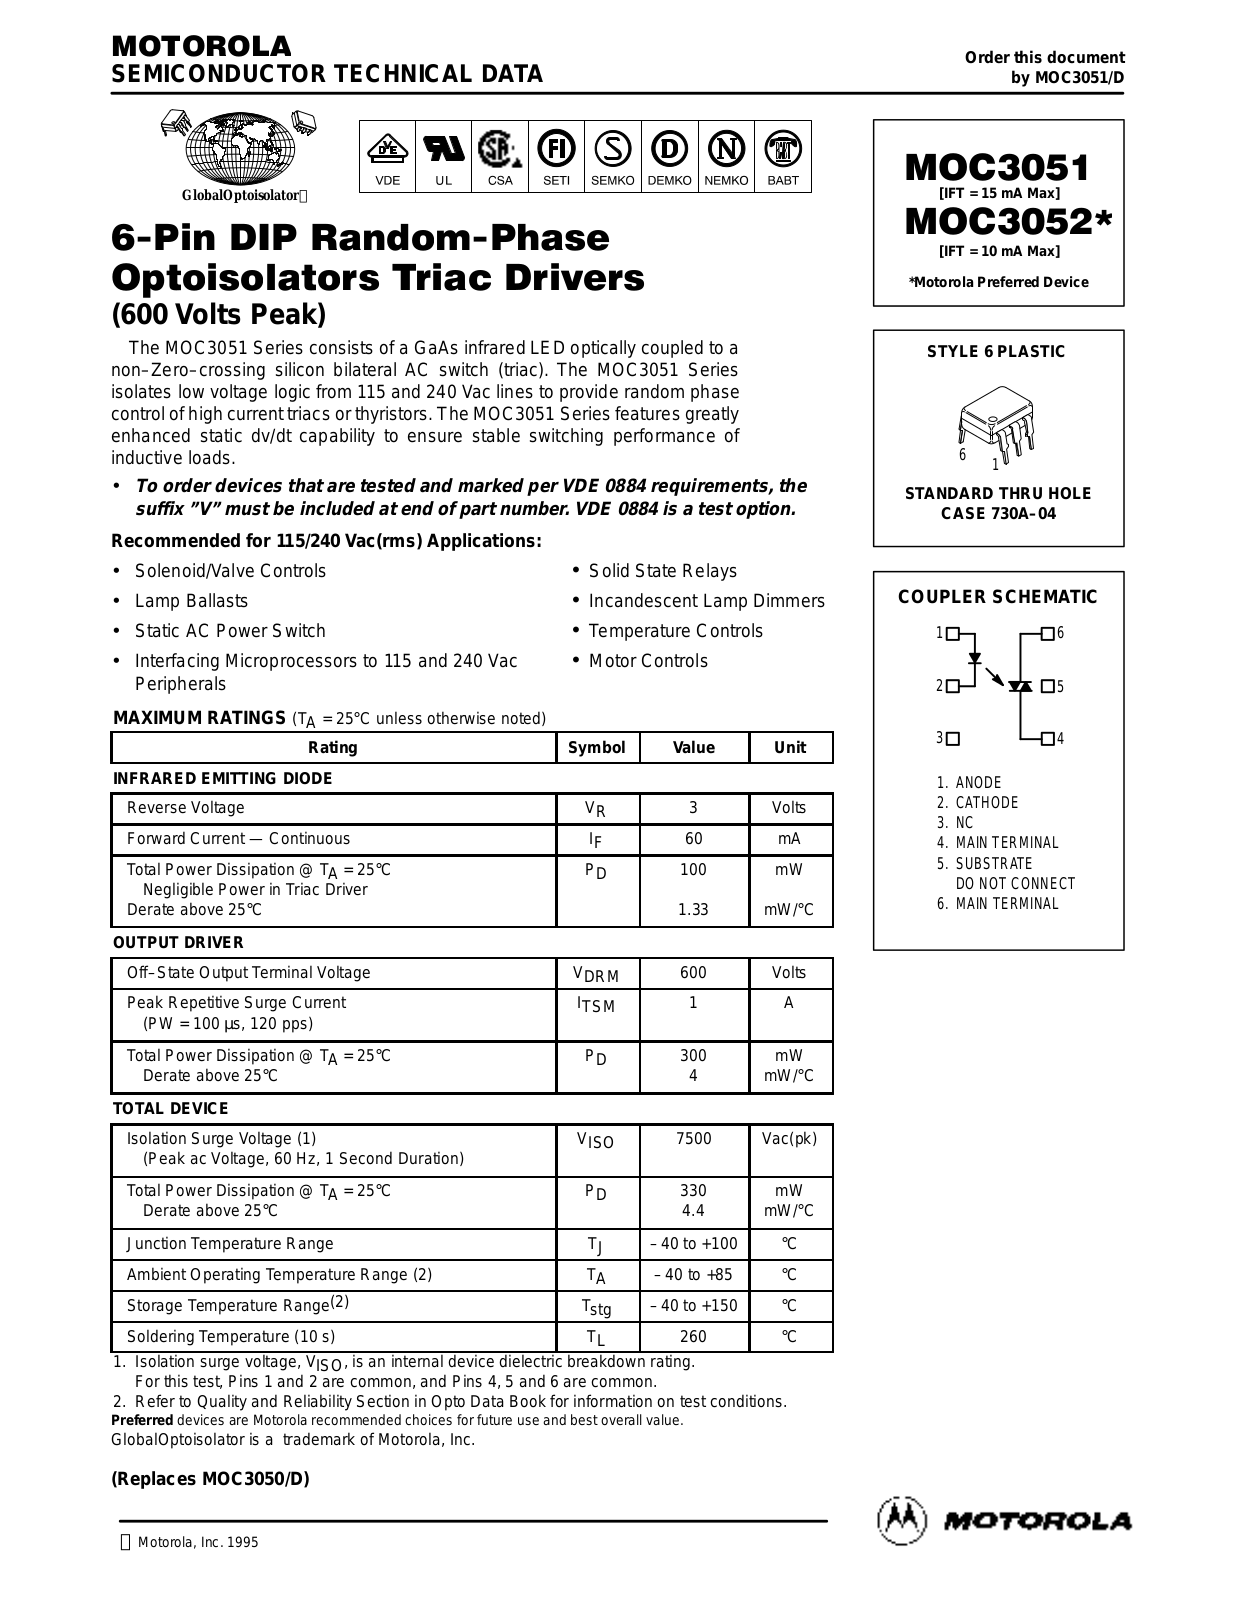 Motorola MOC3052, MOC3051 Datasheet